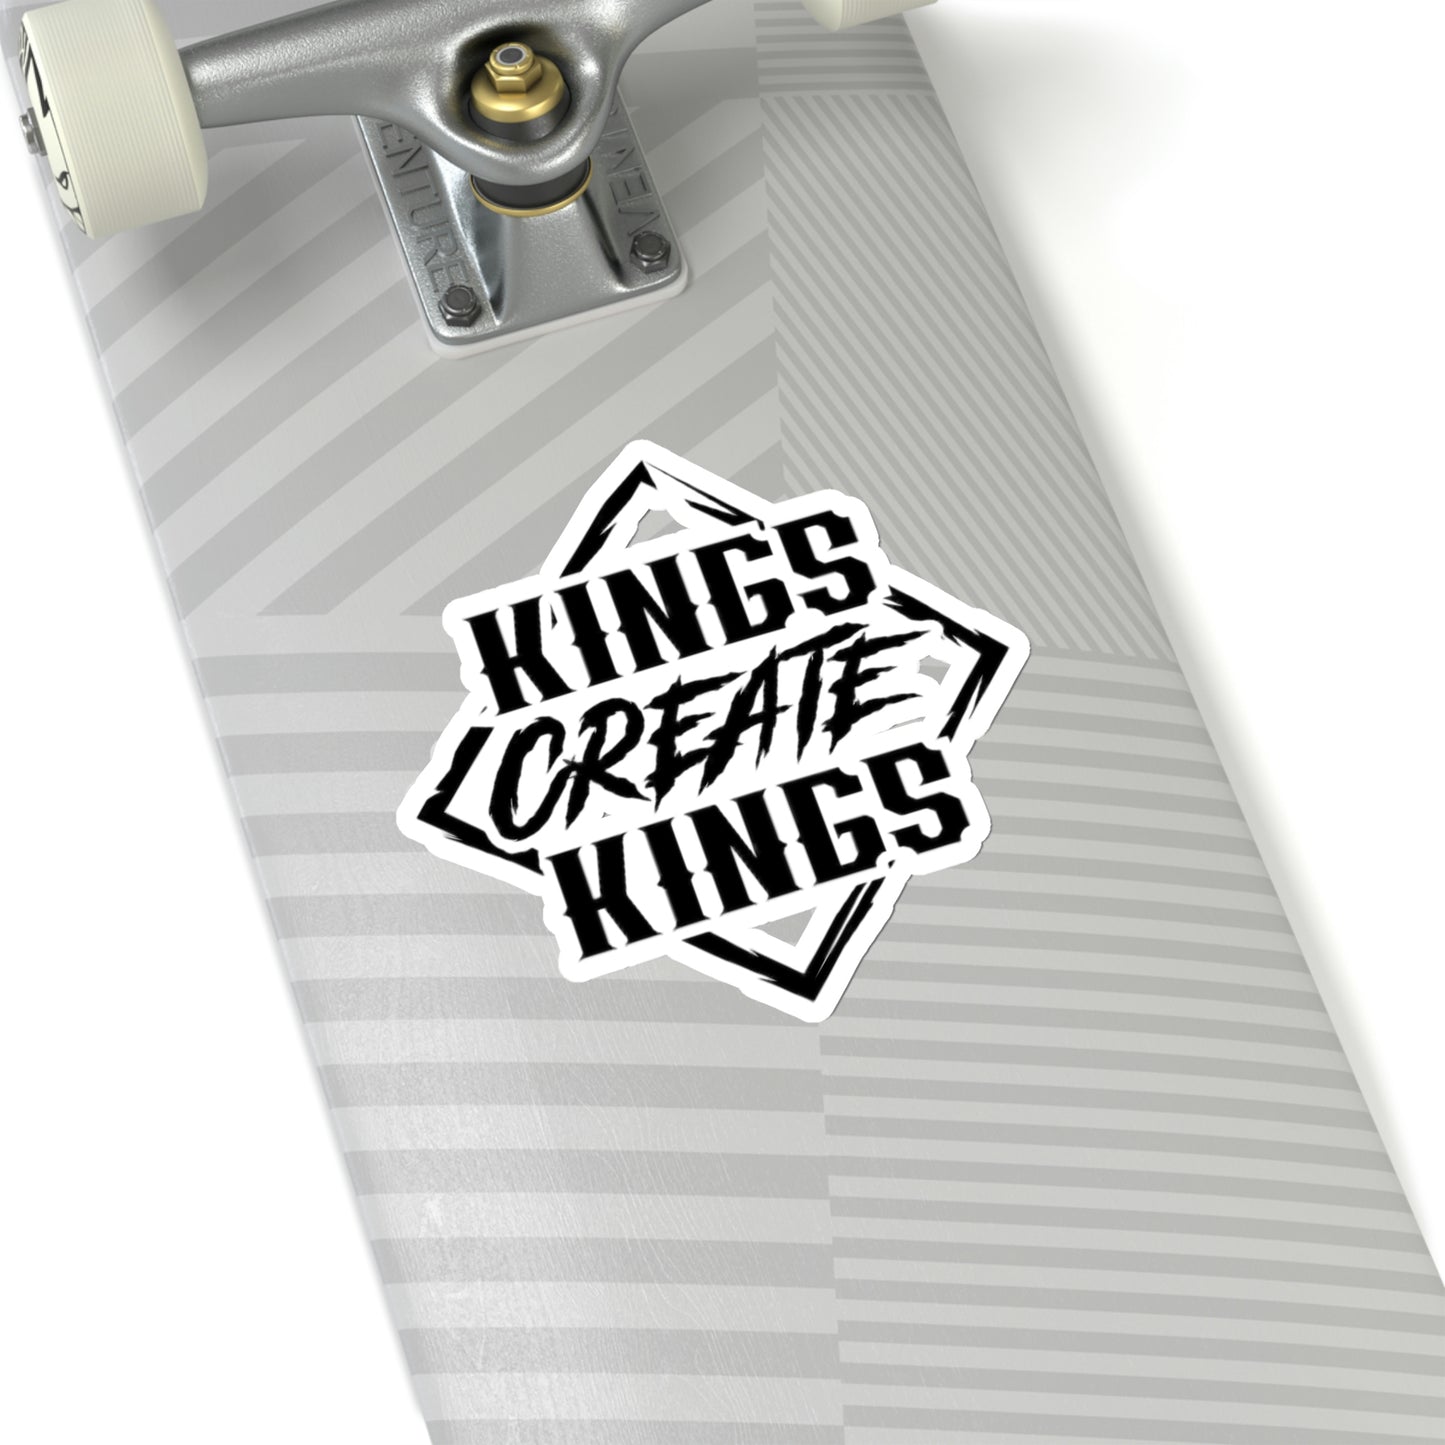 Kings Create Kings Kiss-Cut Stickers